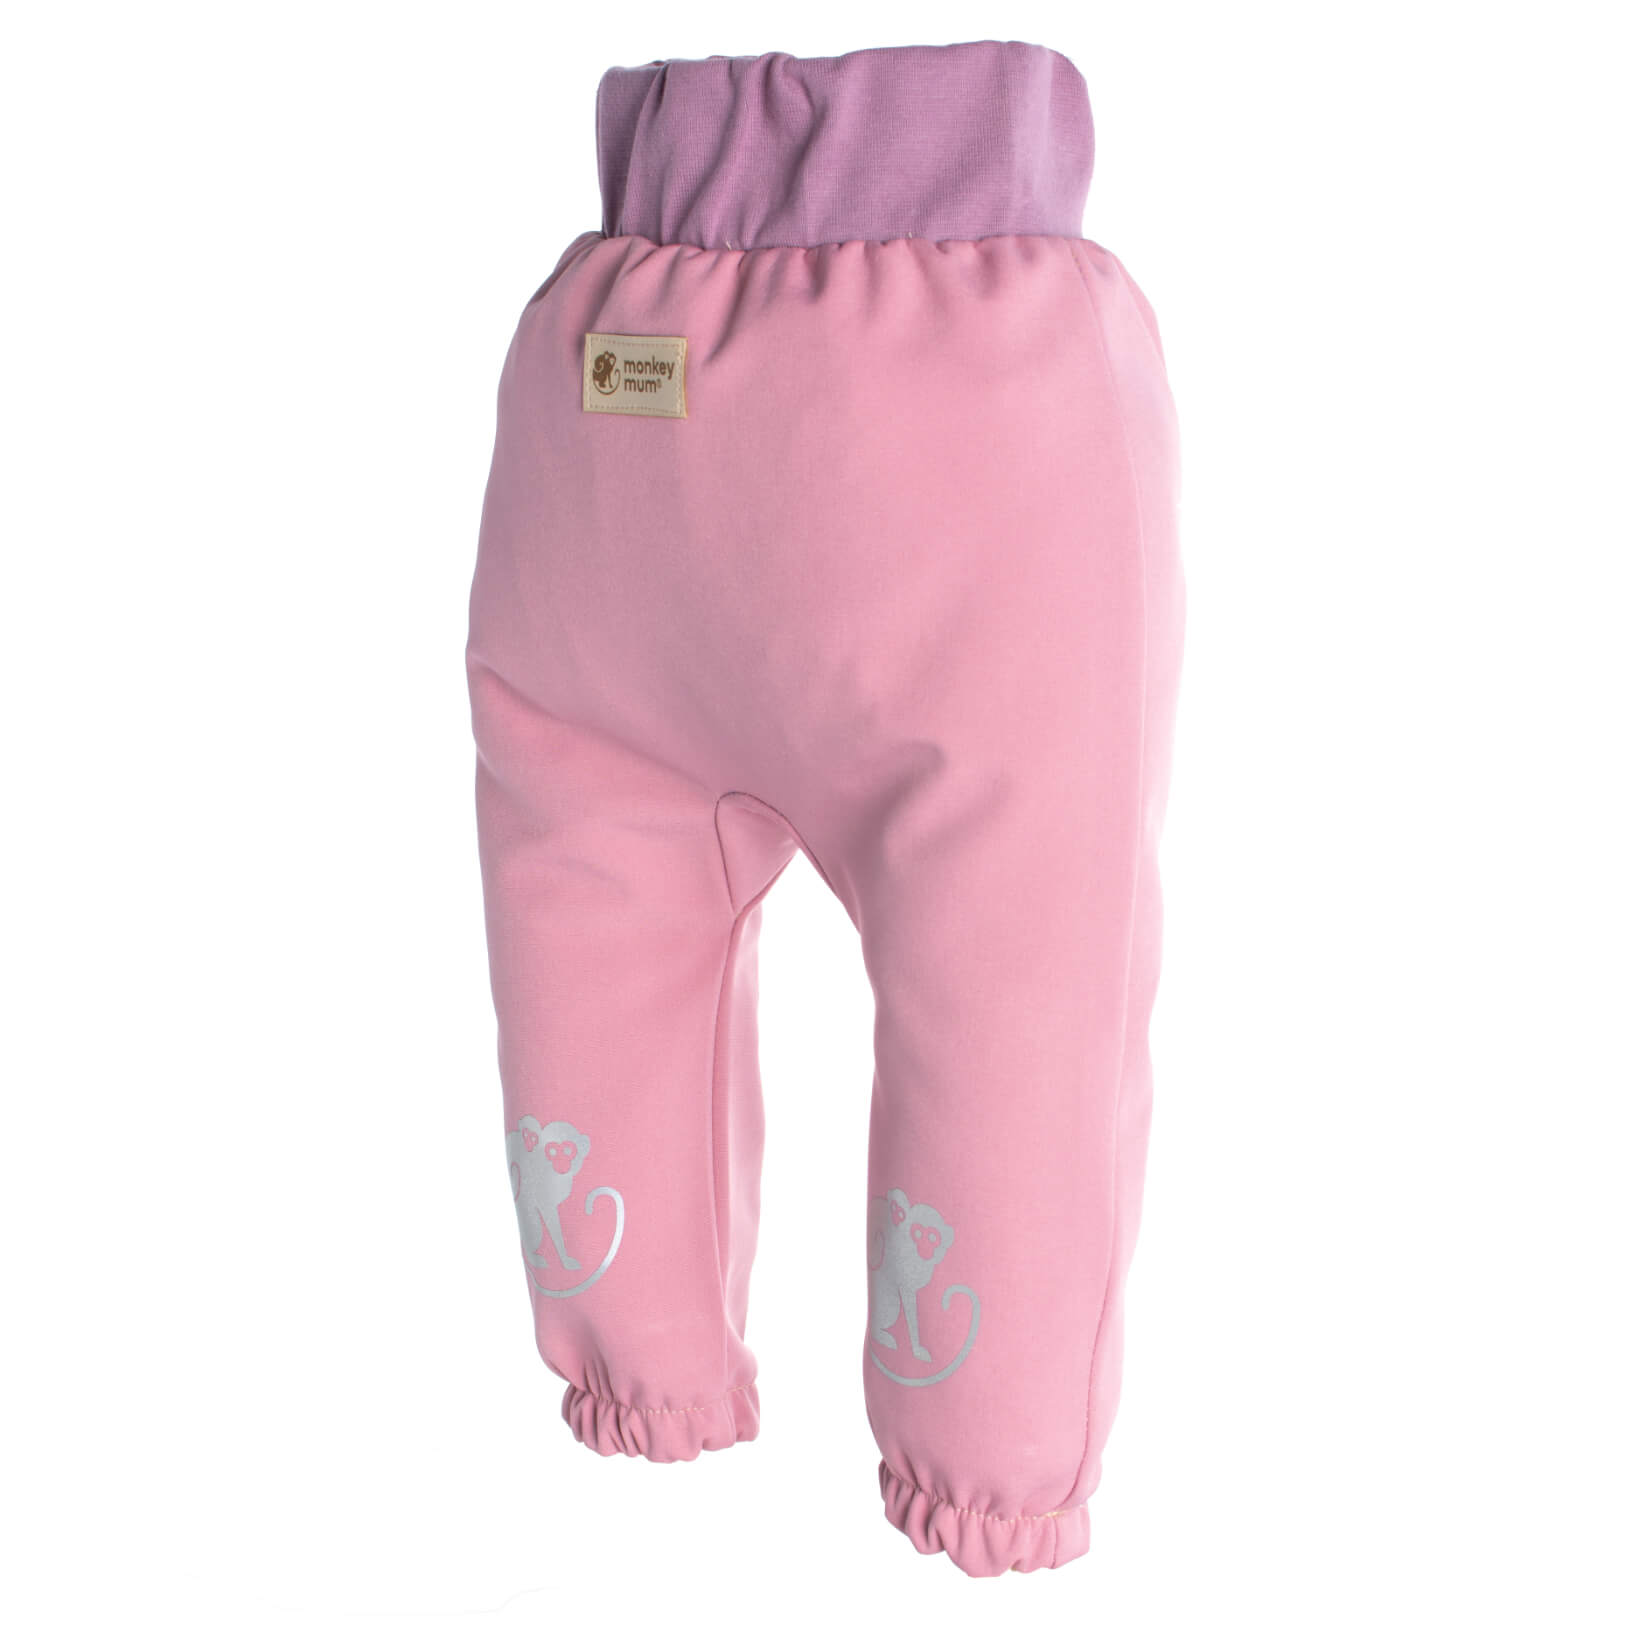 Pantaloni Softshell Per Bambini Monkey Mum® Con Membrana - Zucchero Filato 86